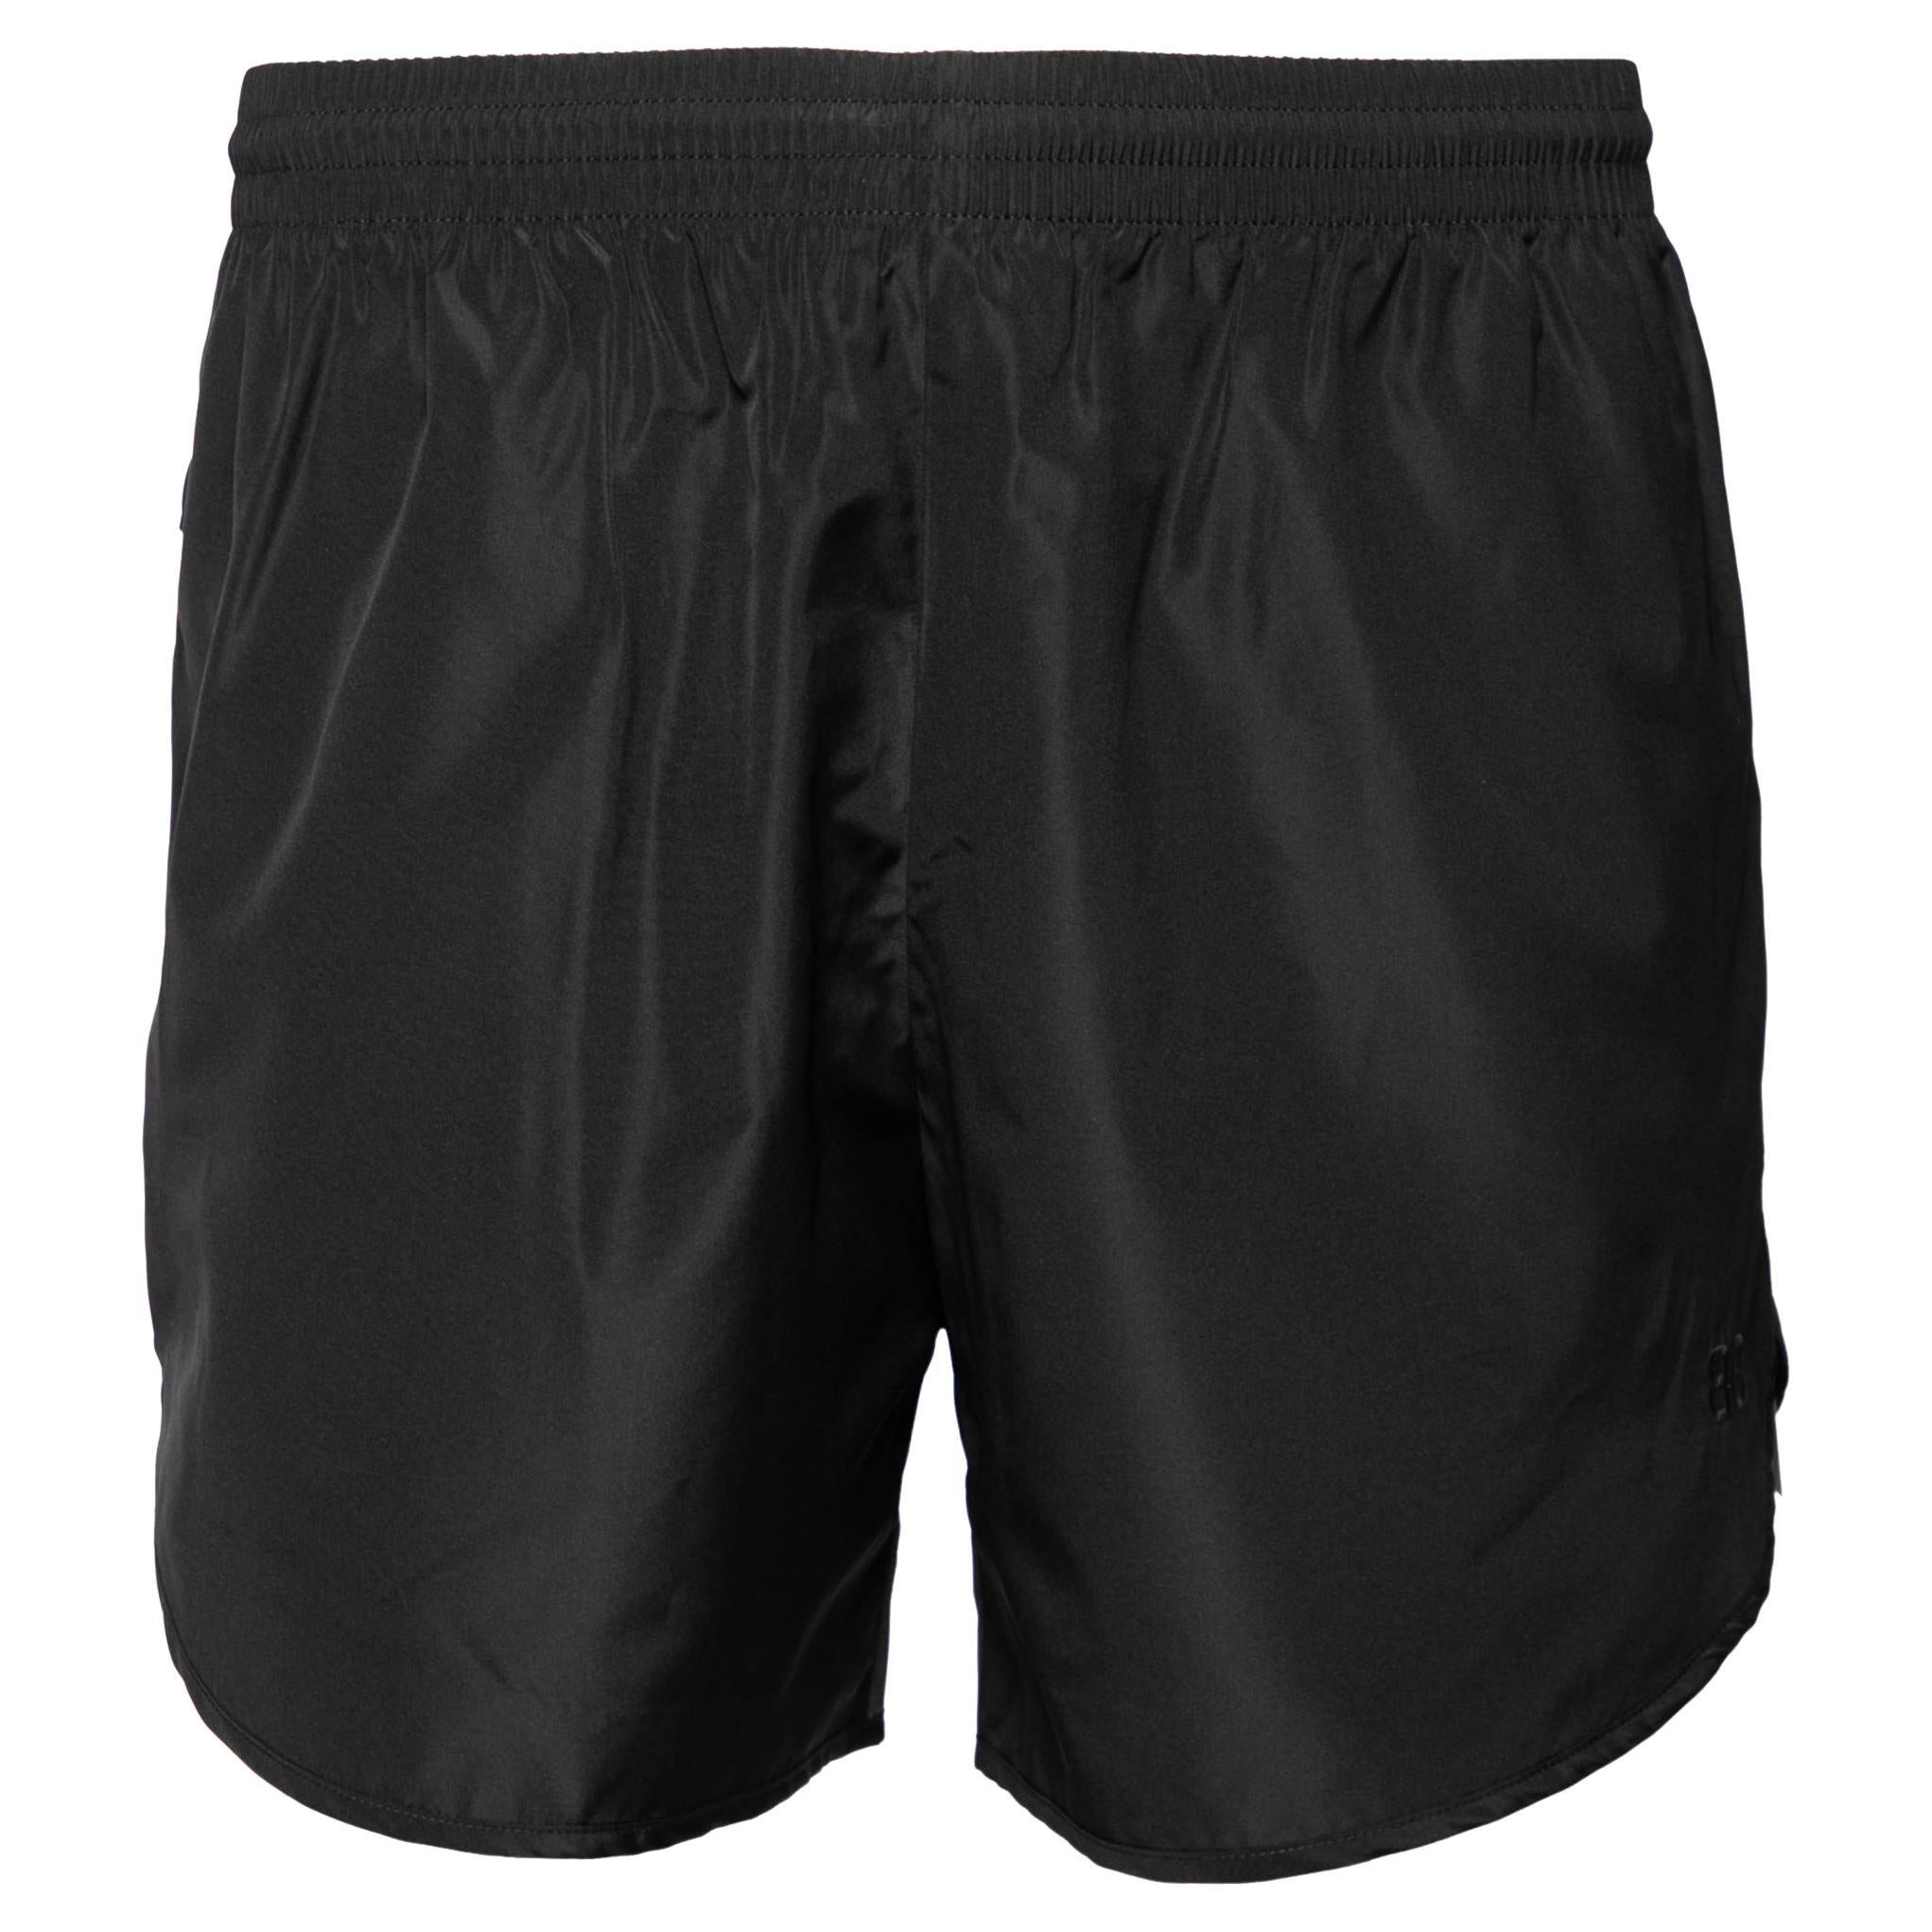 Black Crinkled silk-satin shorts, Balenciaga